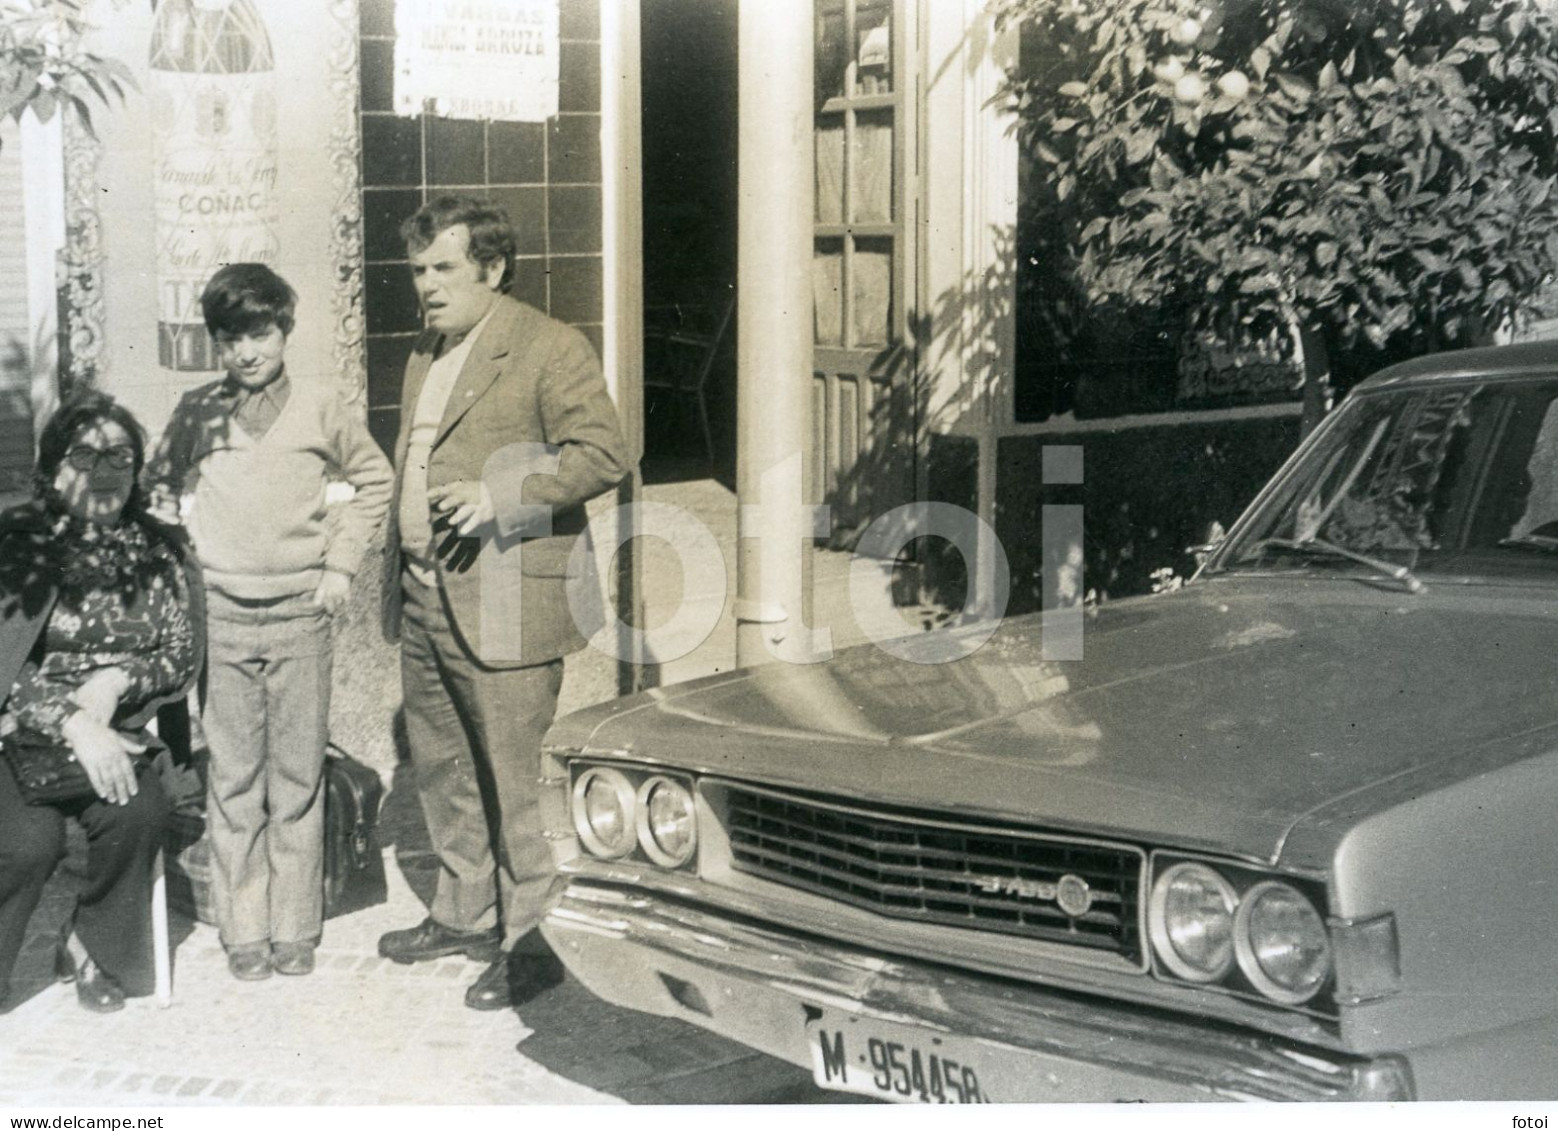 1968  PHOTO FOTO CAR COCHE DODGE DART BARREIROS MADRID ESPANA SPAIN AT264 - Cars